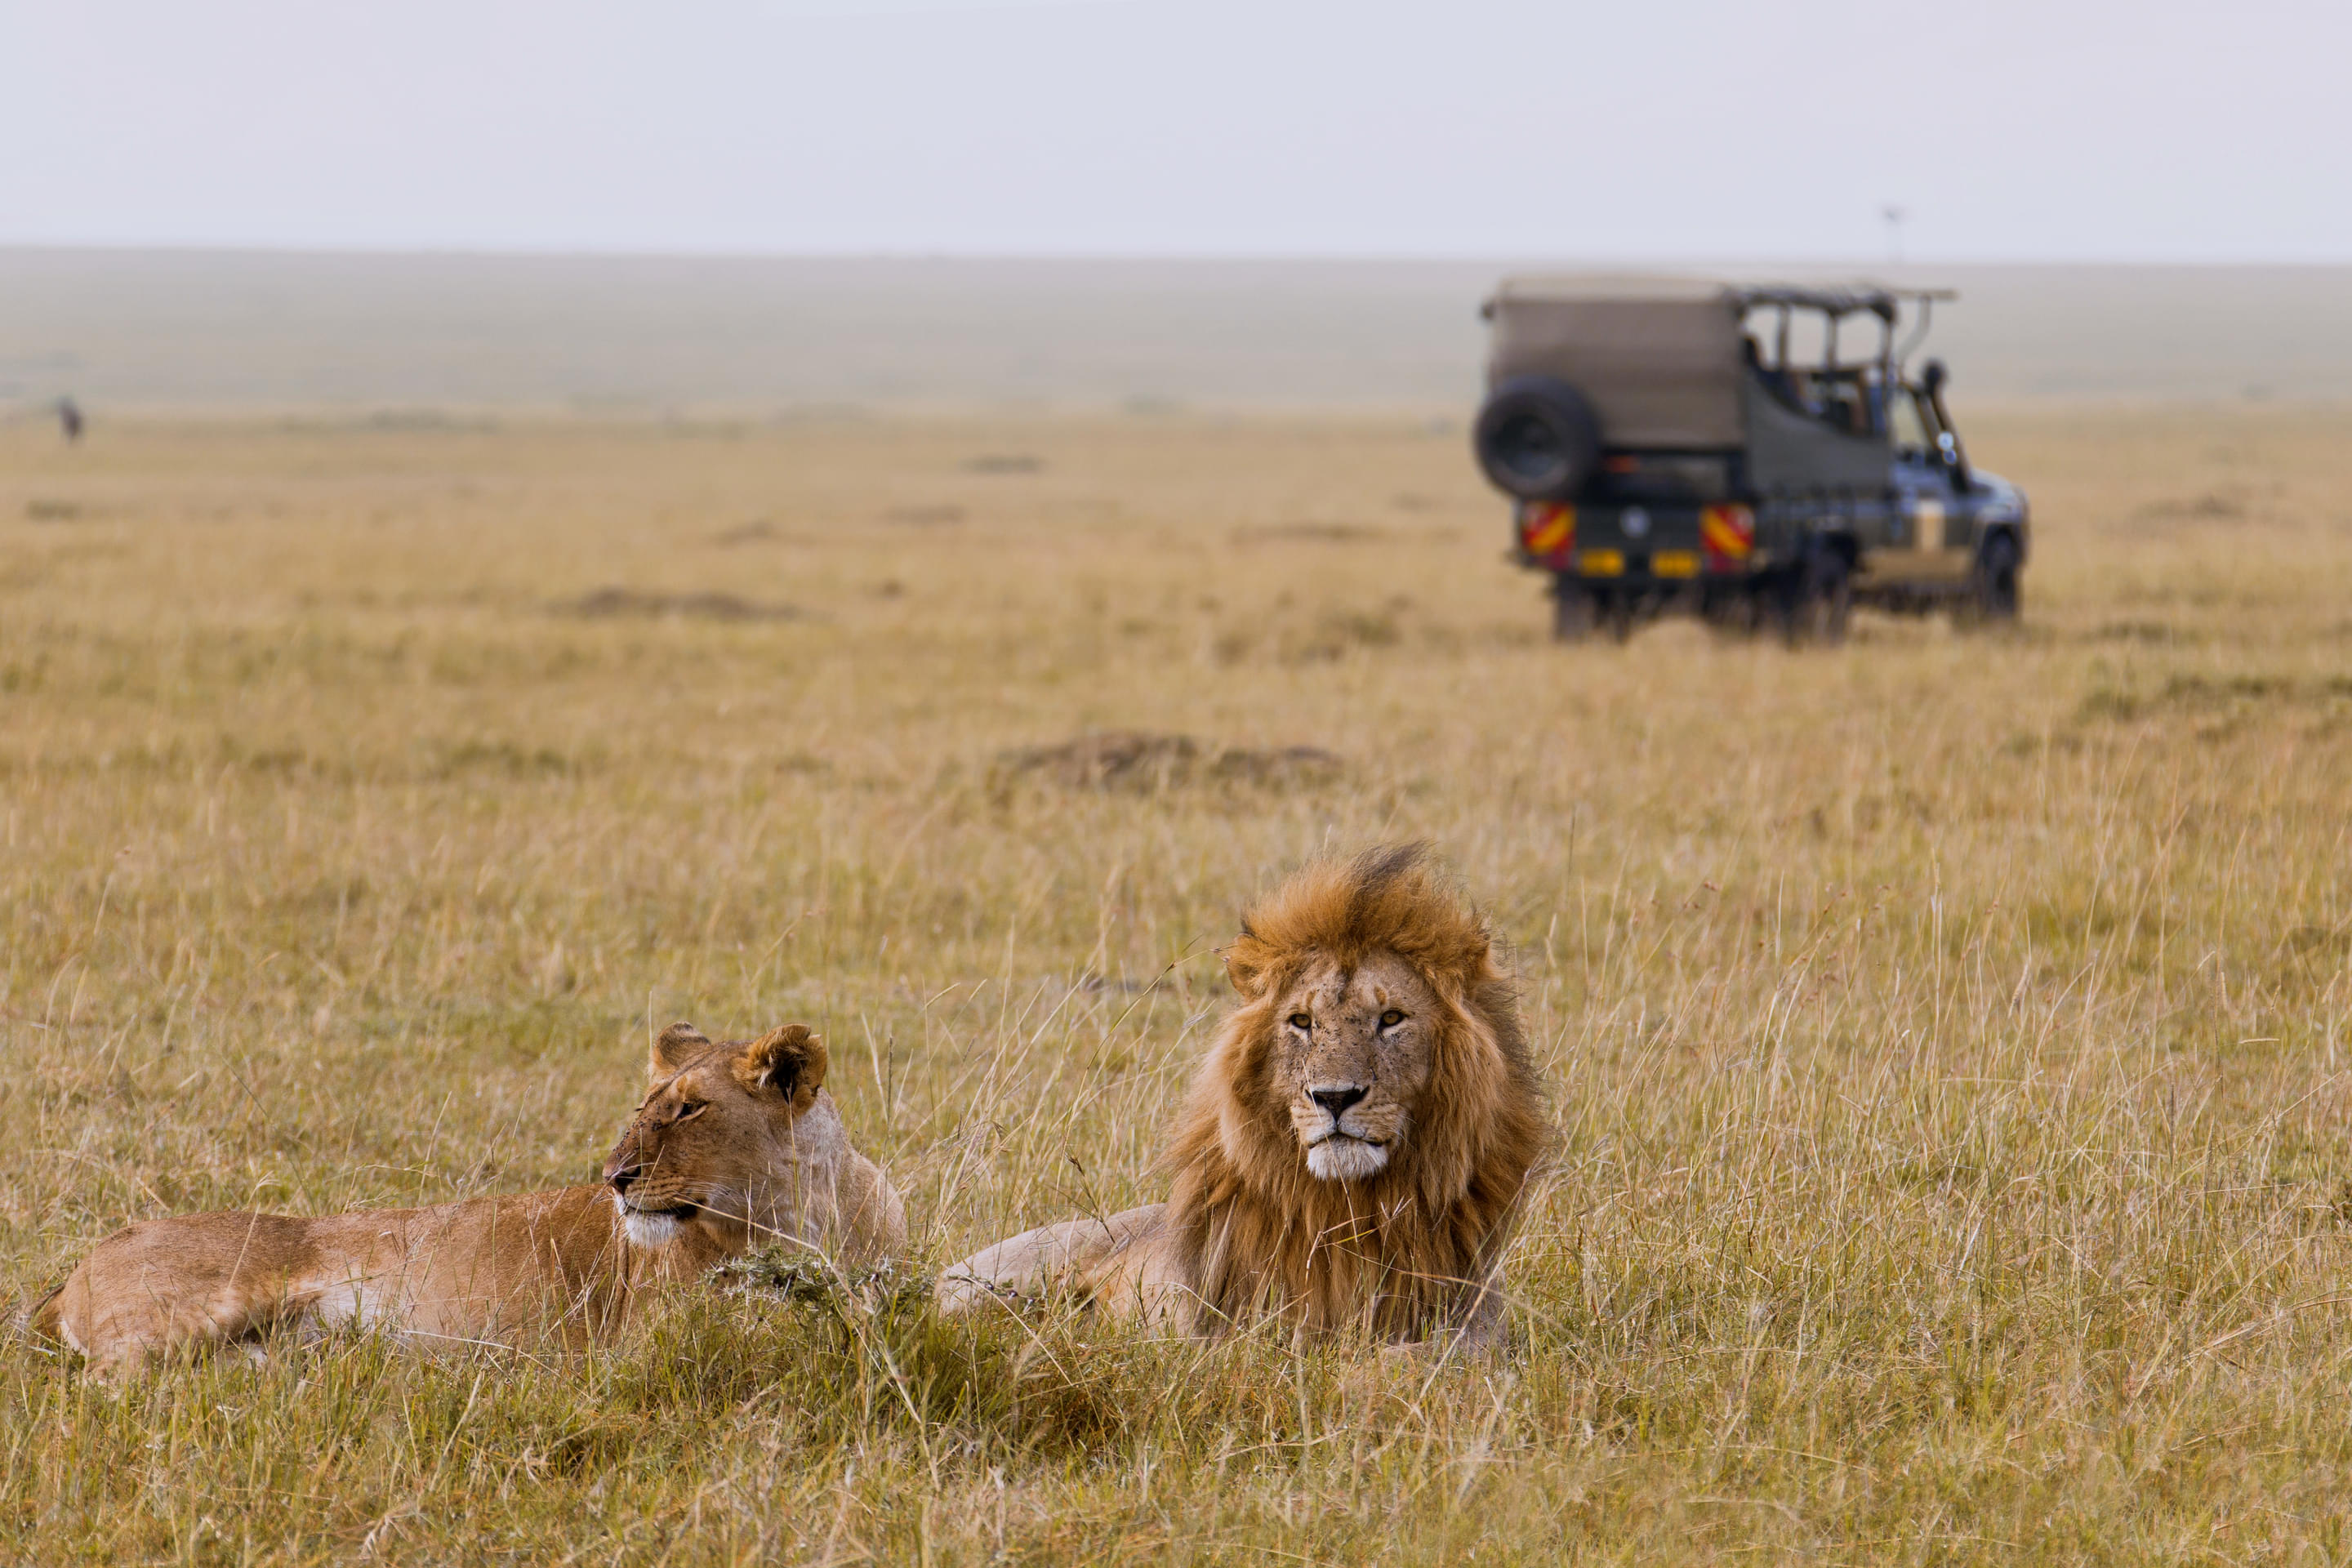 Maasai Mara National Reserve Overview